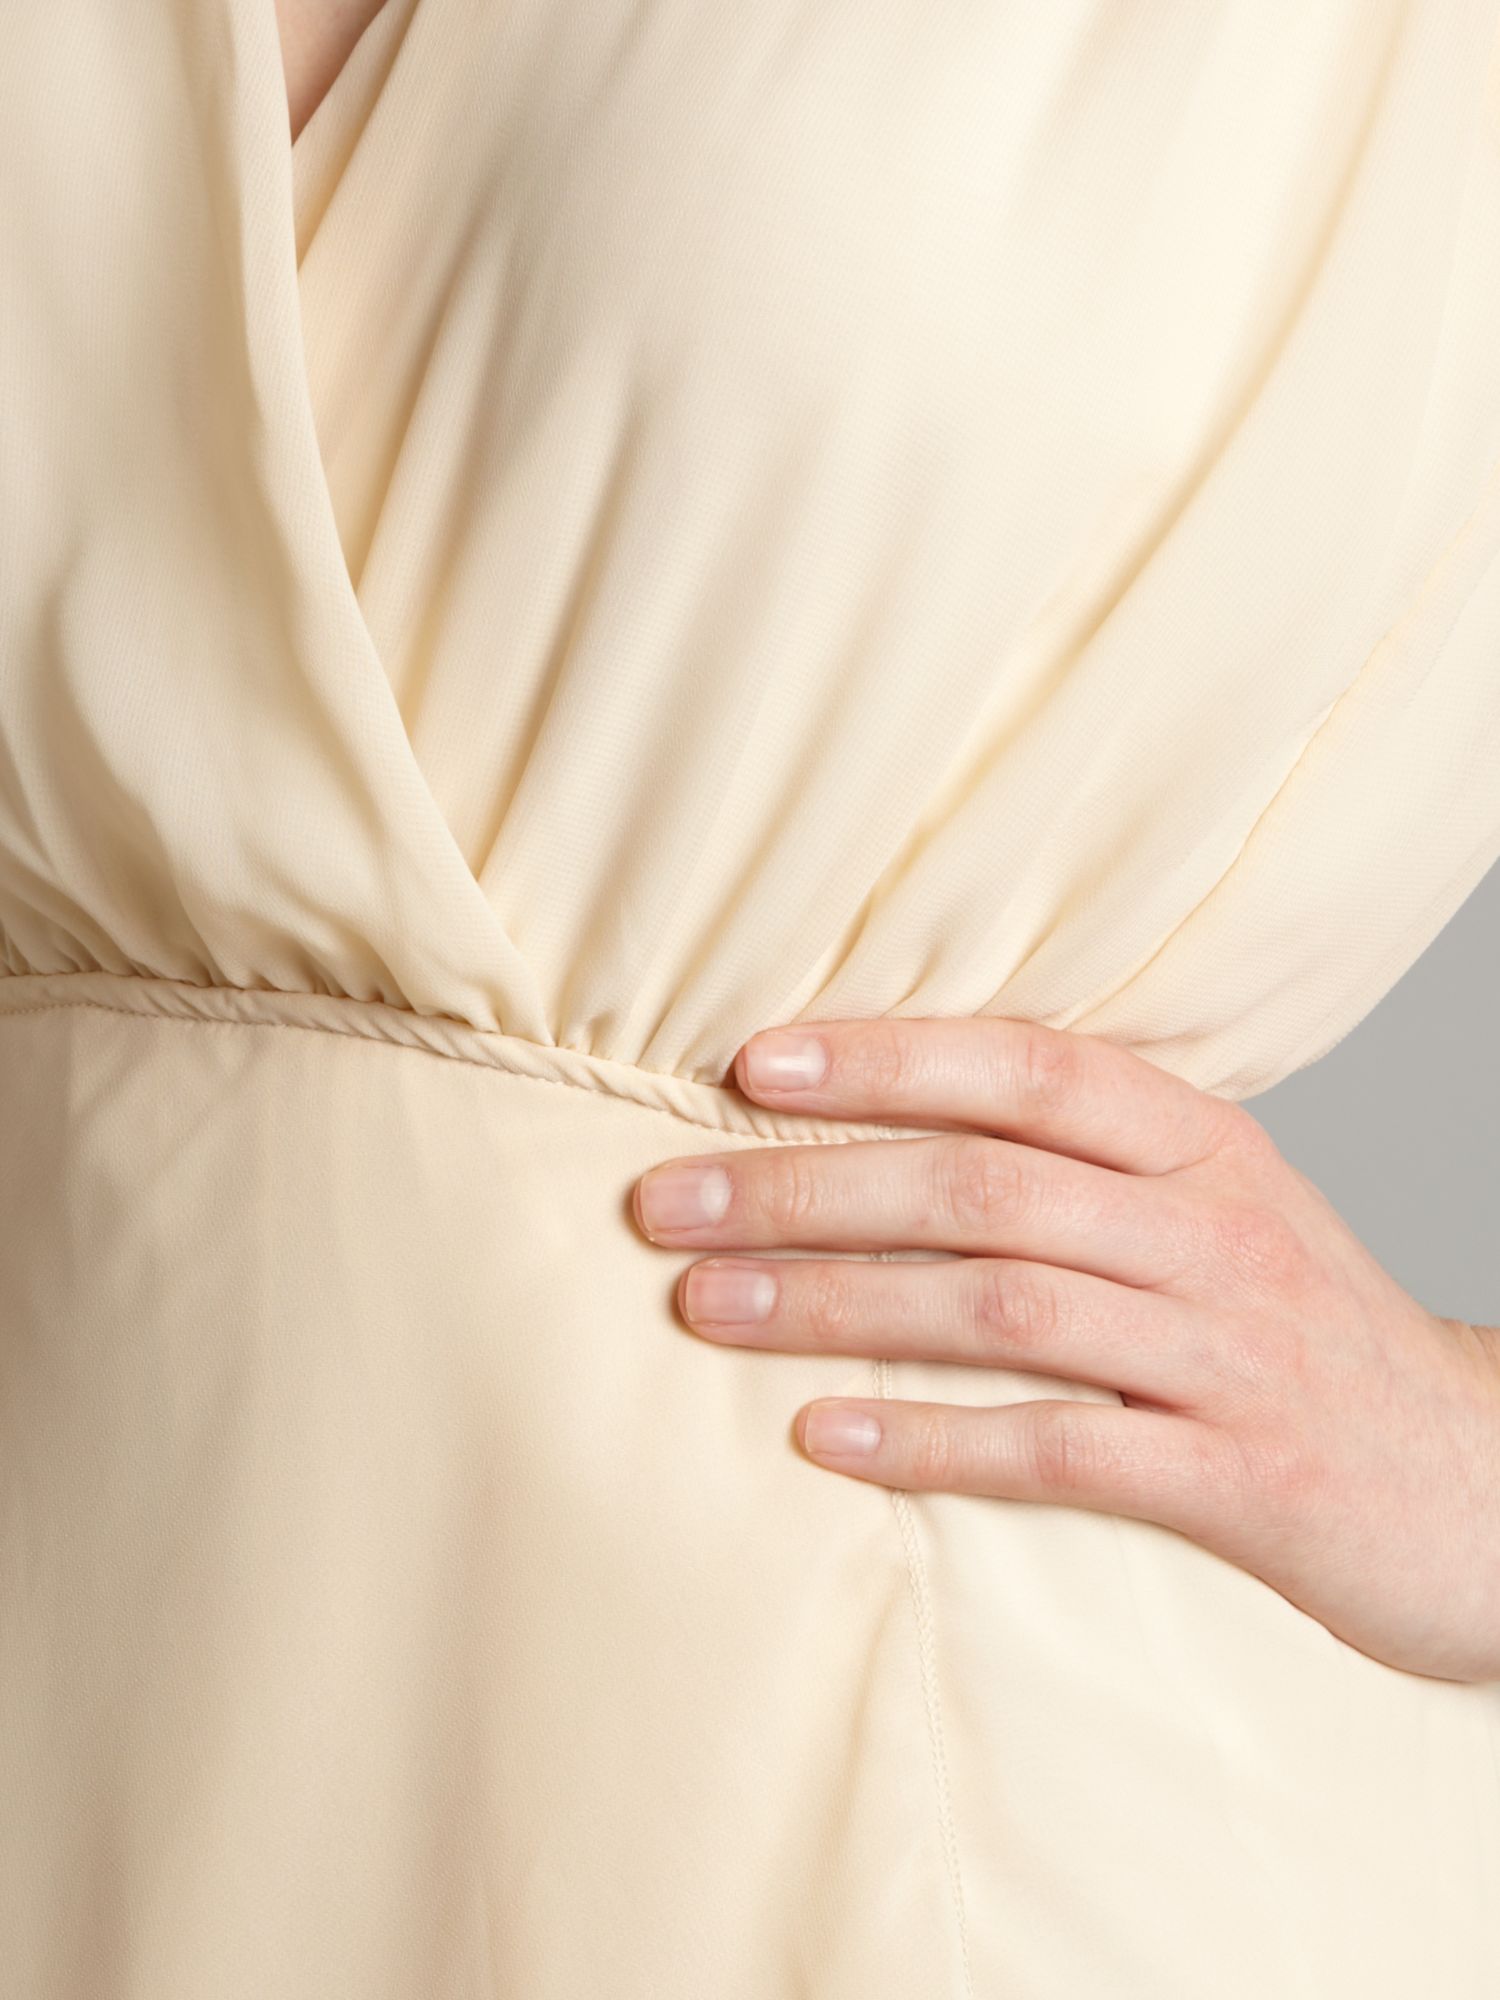 Tfnc london Sleeveless Wrap Dress in Natural | Lyst